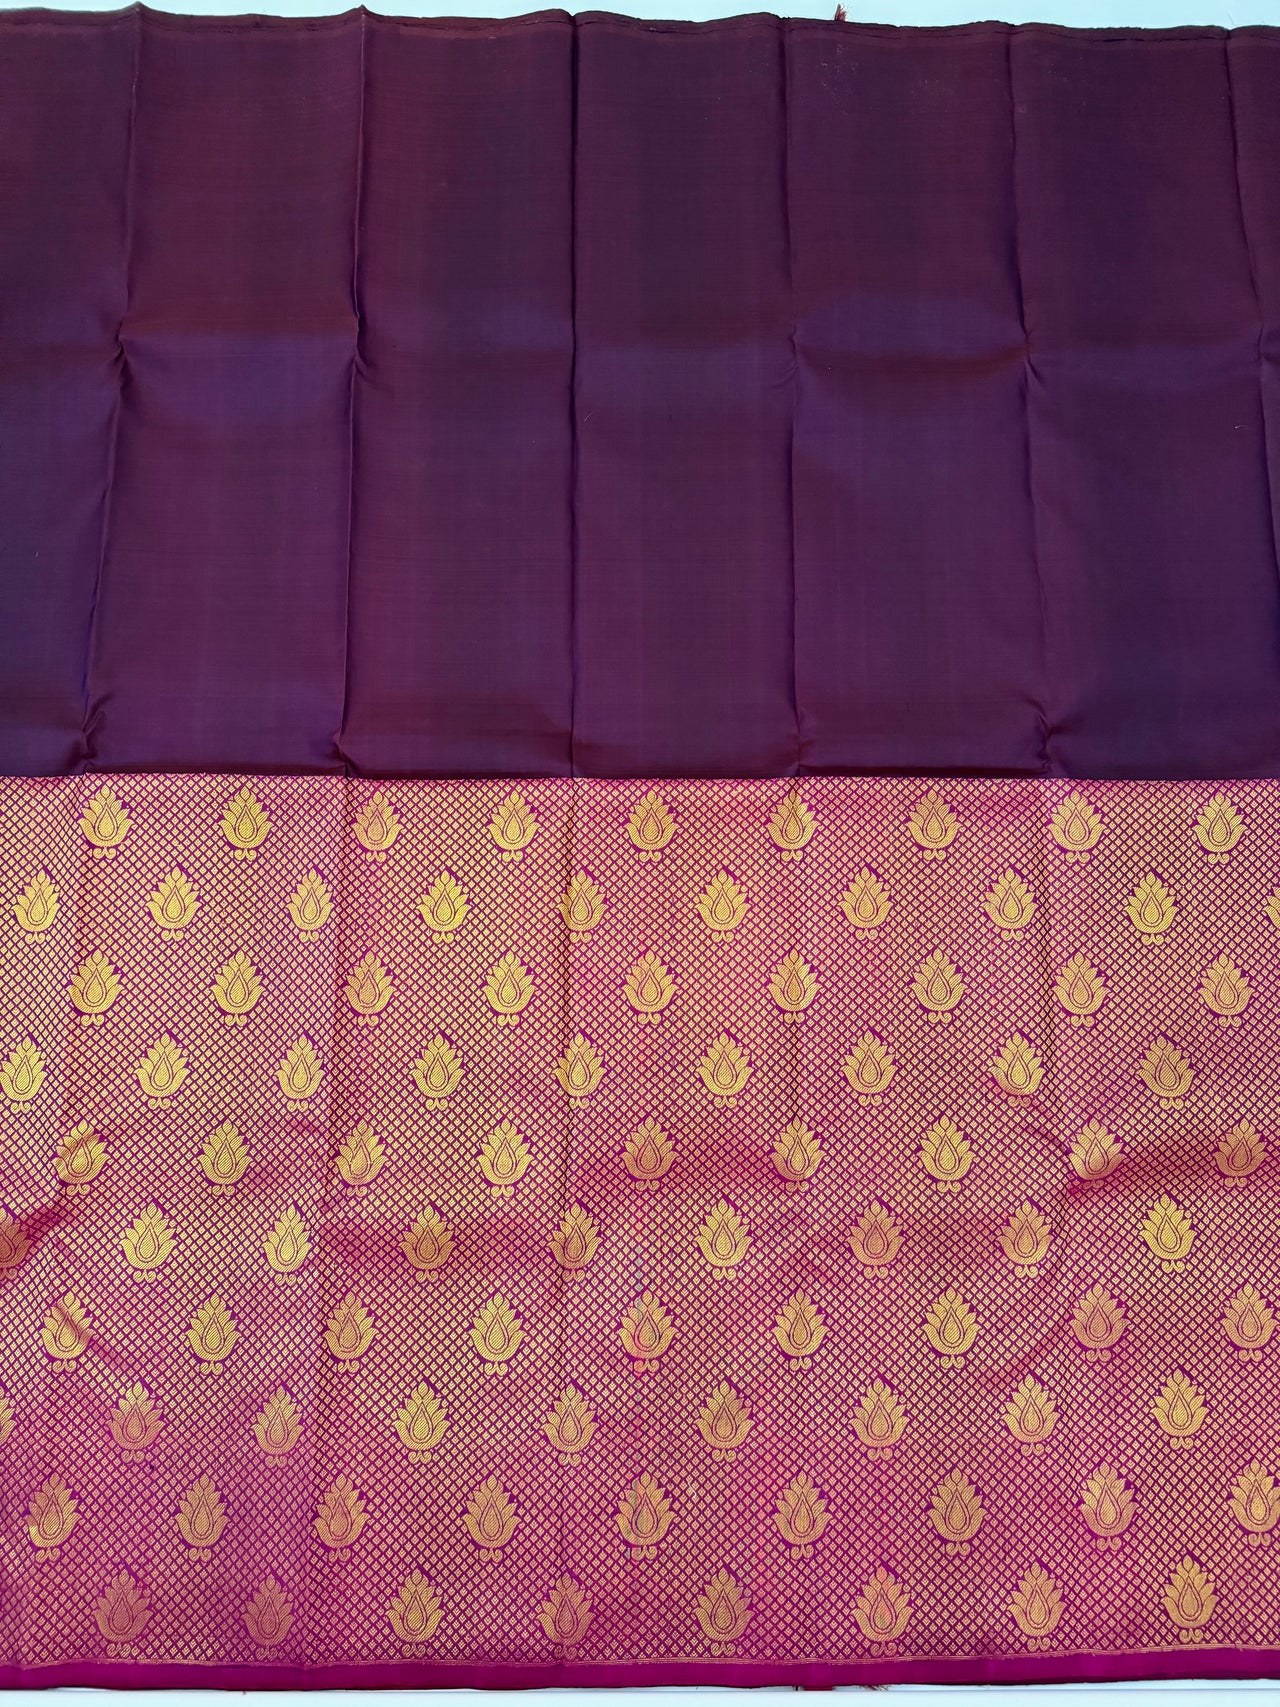 Kanchipuram korvai silk saree | Half & Half | Purple | Handwoven | Ships from California